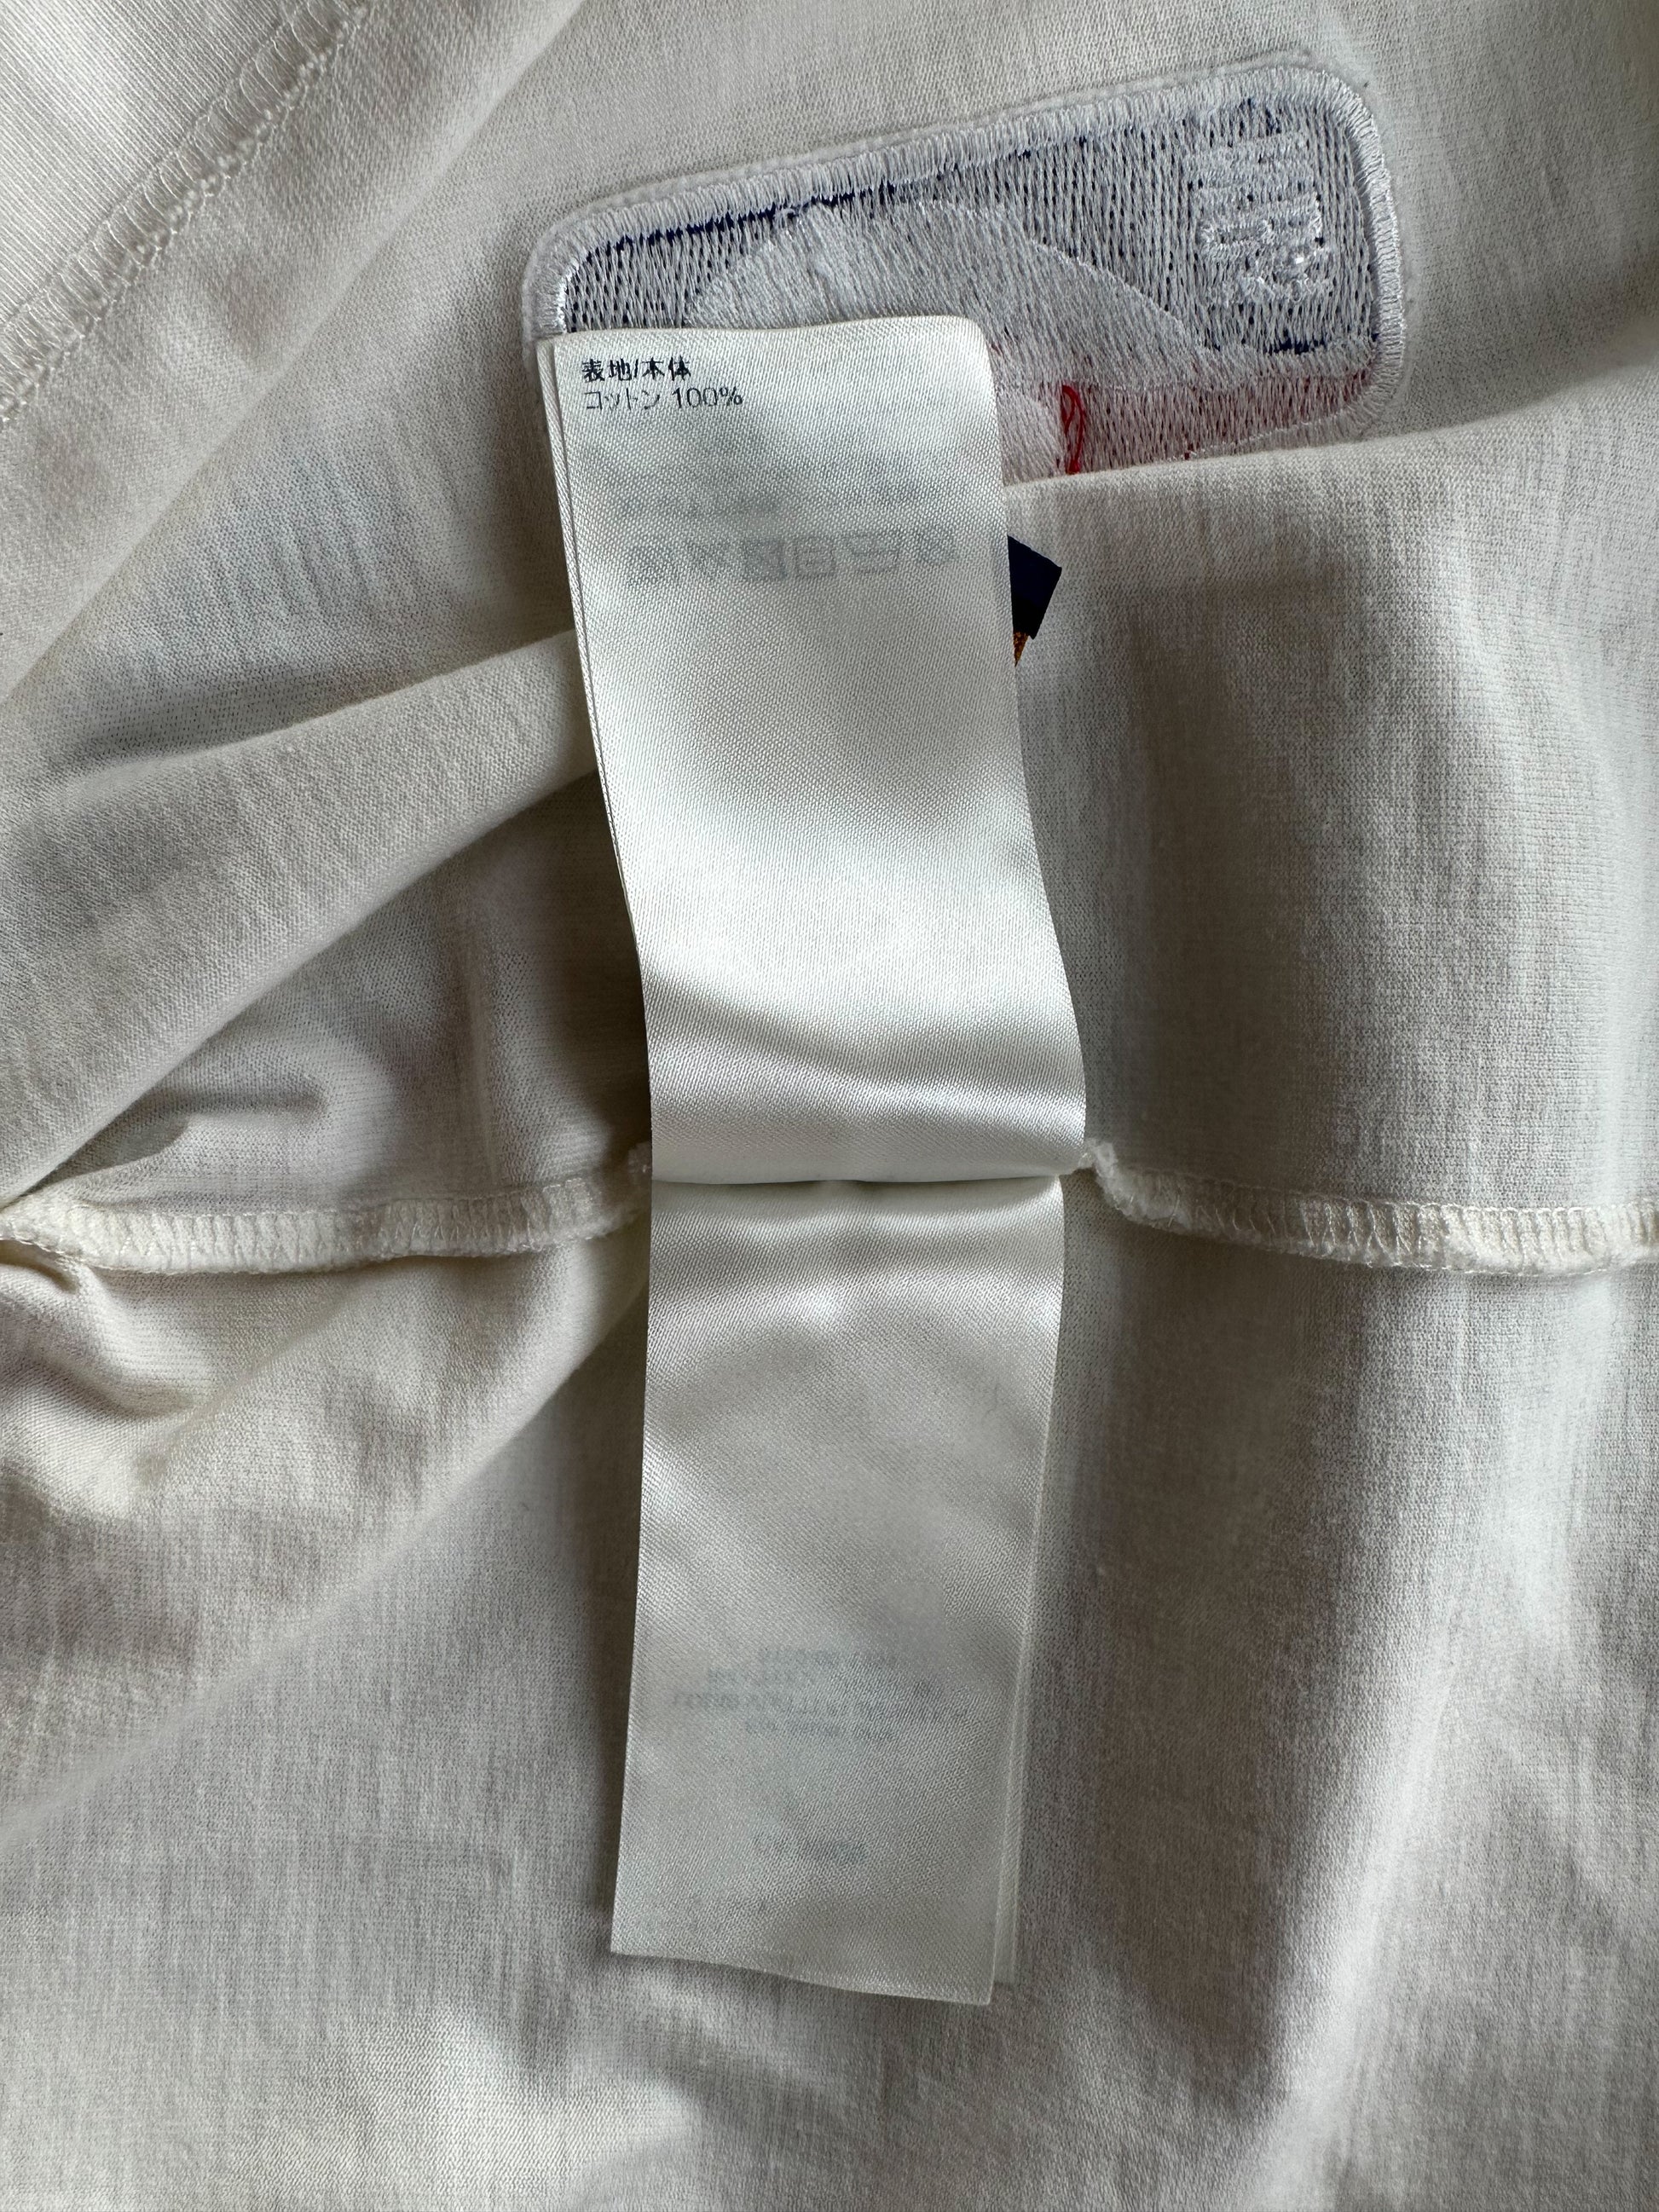 Louis Vuitton White Cotton Logo Printed NBA Short Sleeve T-Shirt S